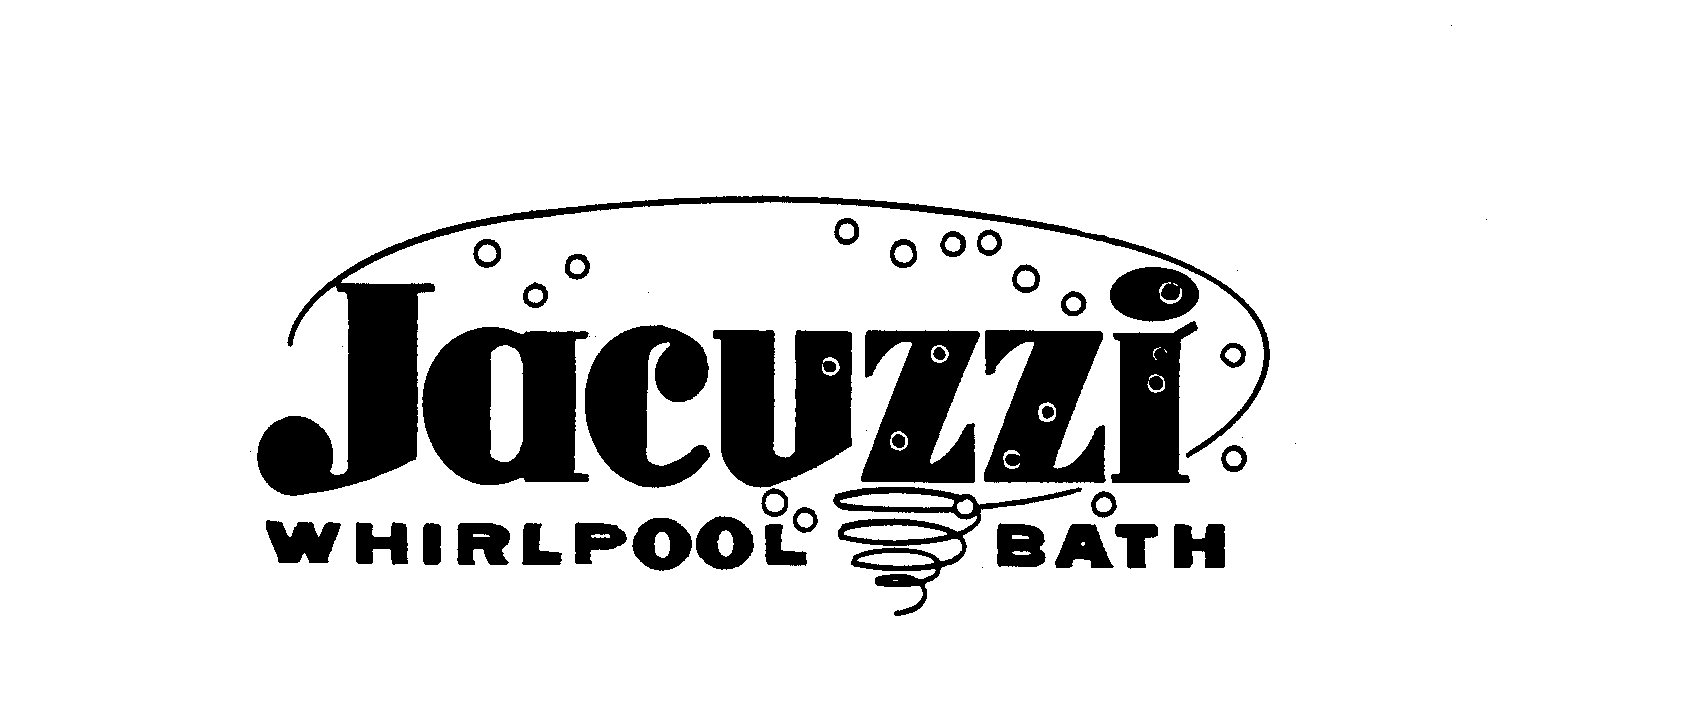 JACUZZI WHIRLPOOL BATH